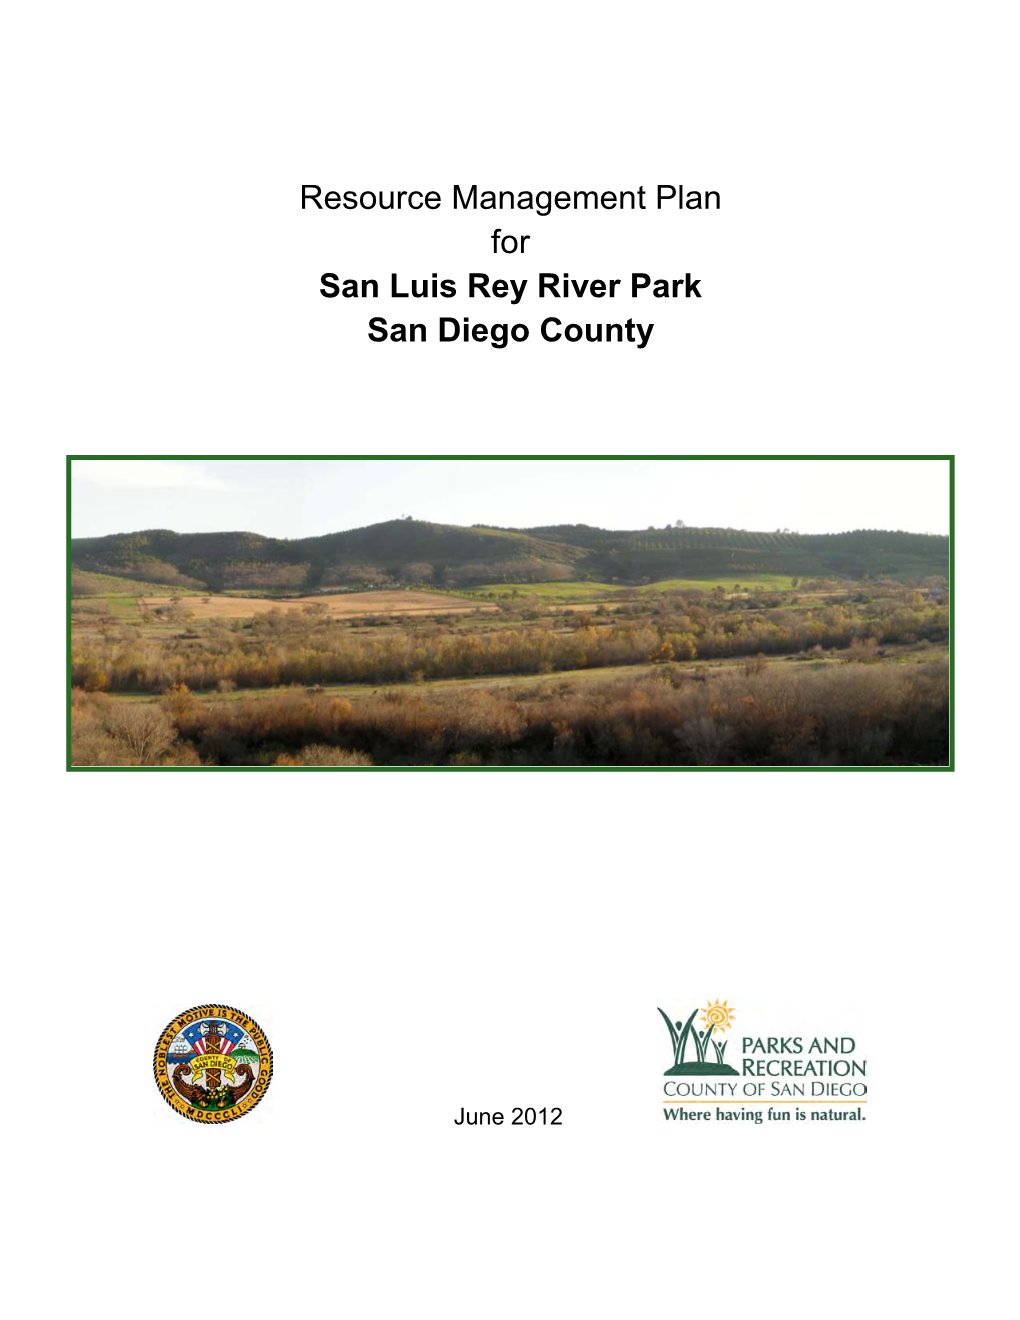 Resource Management Plan for San Luis Rey River Park San Diego County